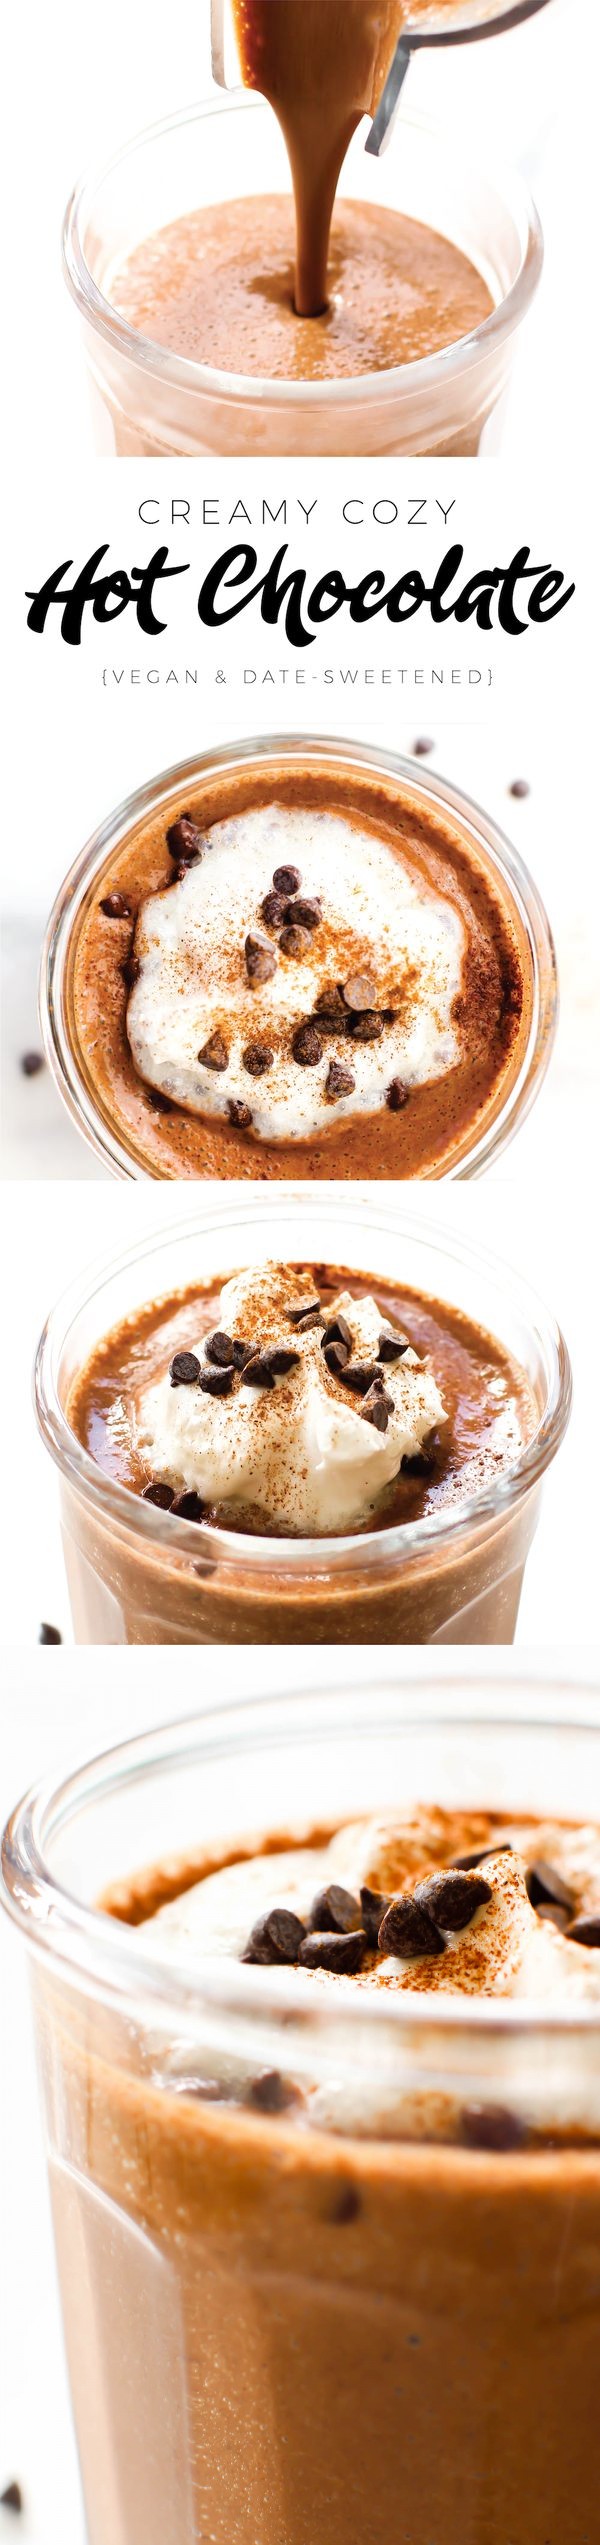 Creamy Cozy Date-Sweetened Hot Chocolate